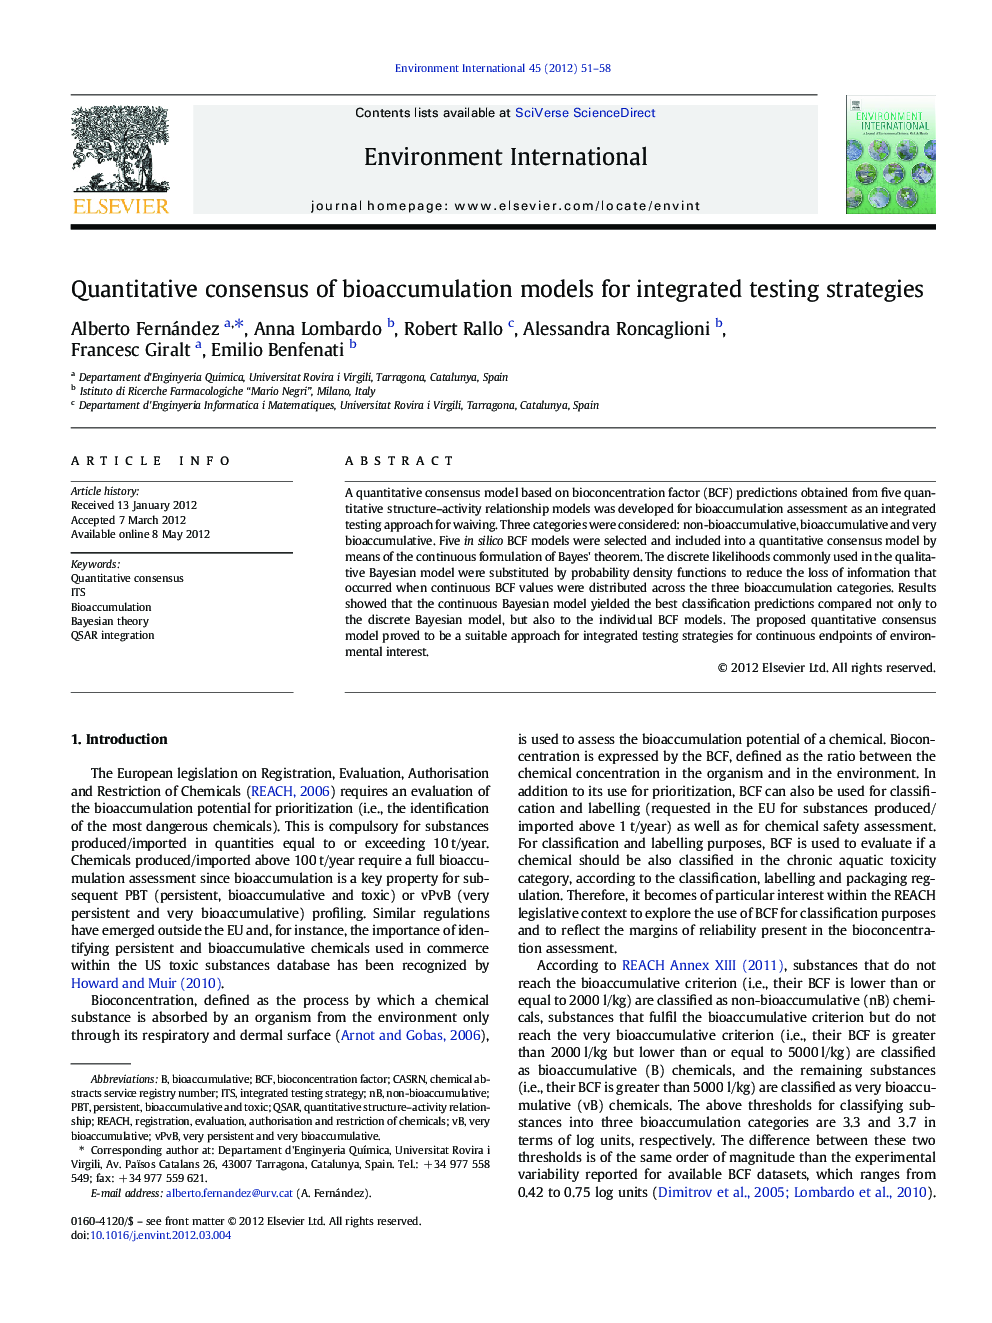 Quantitative consensus of bioaccumulation models for integrated testing strategies